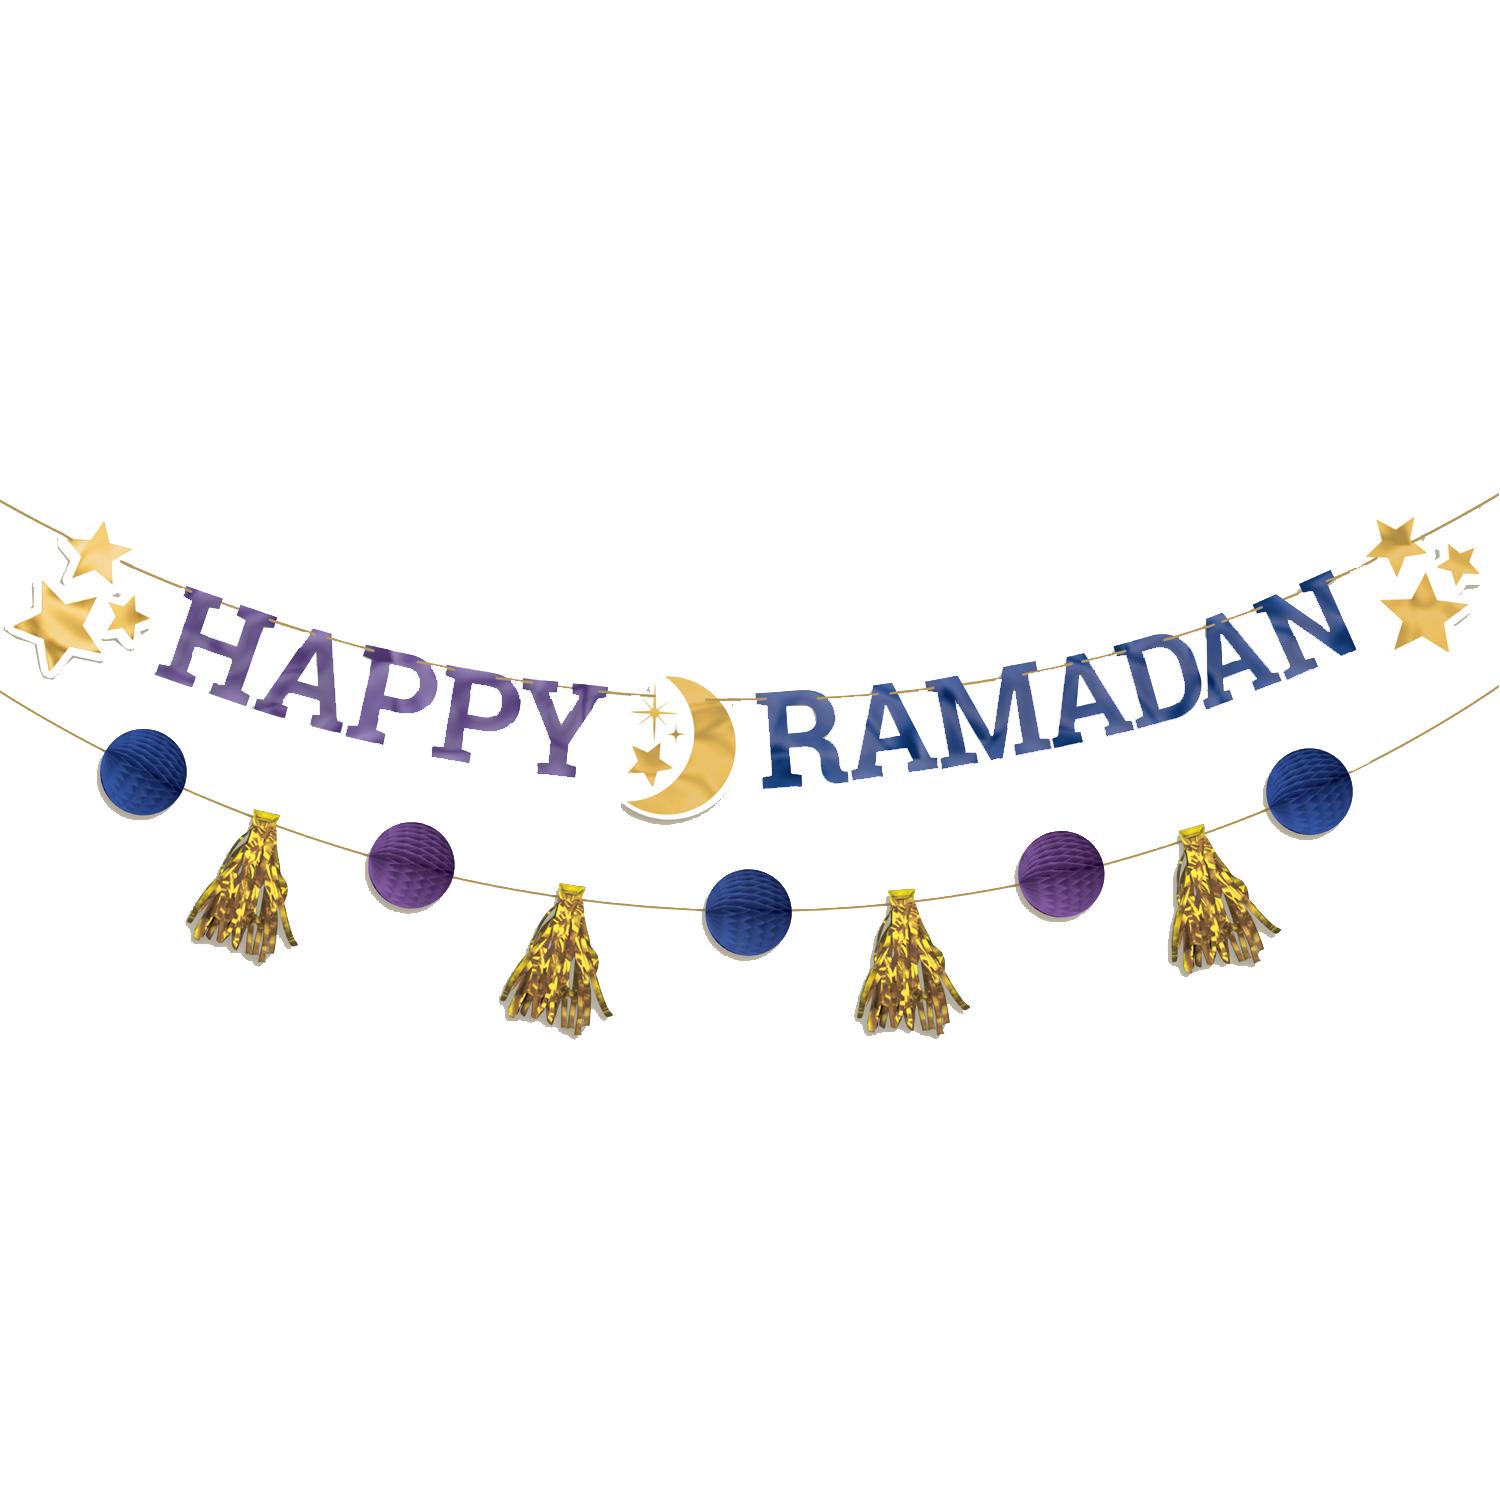 Happy Ramadan Letter Banner Kit Decorations - Party Centre - Party Centre